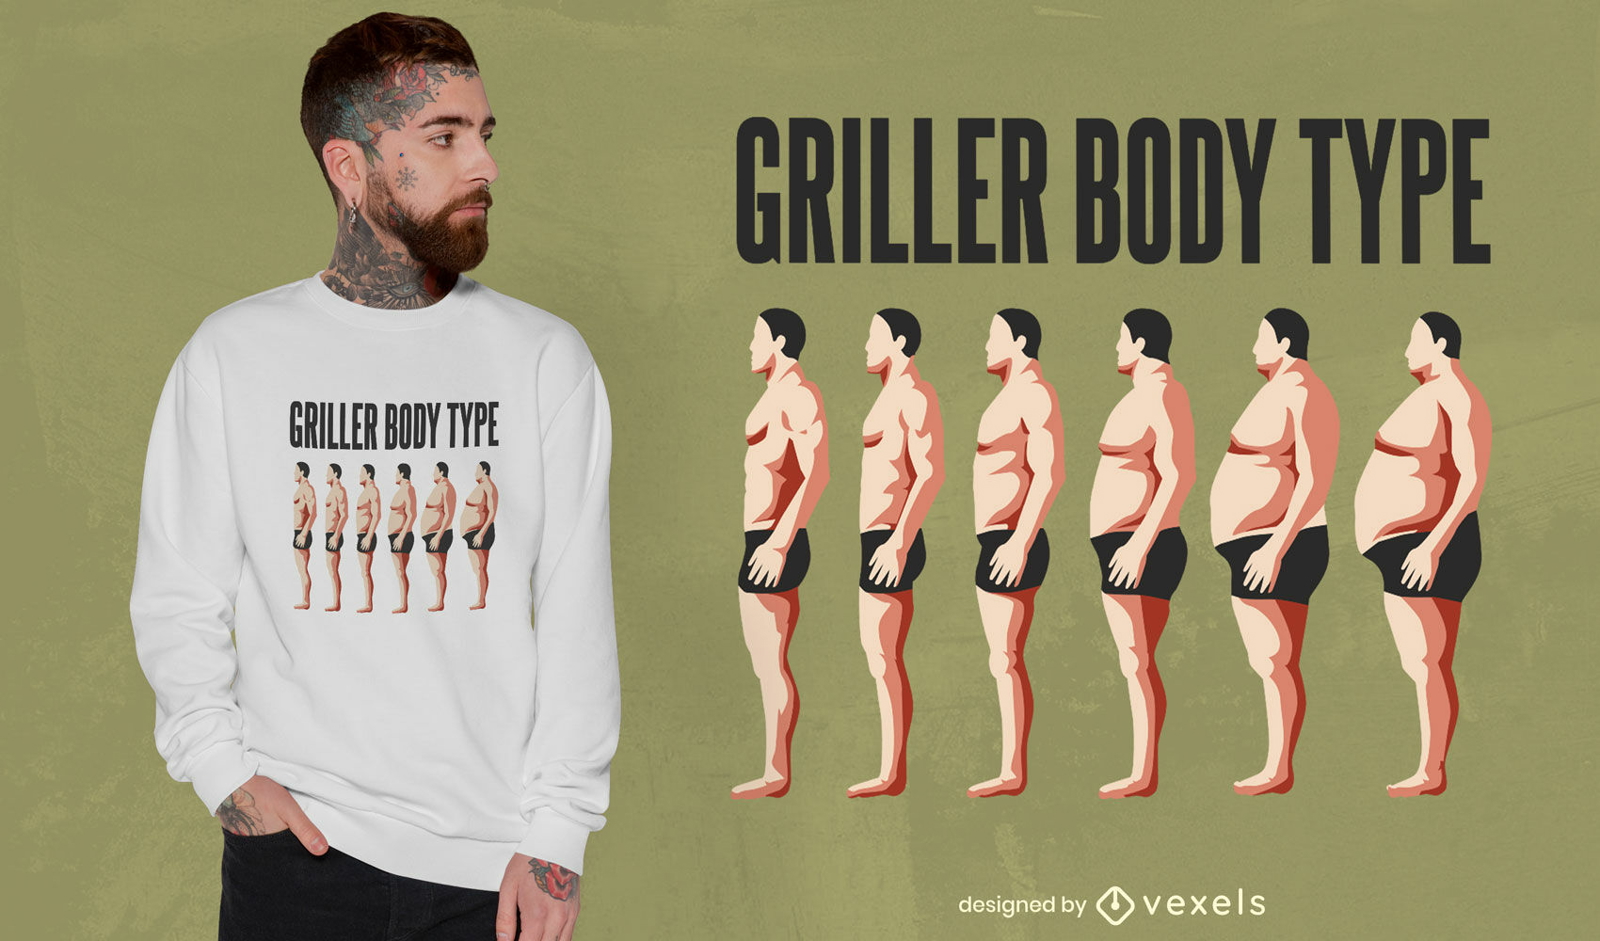 Griller body types t-shirt design